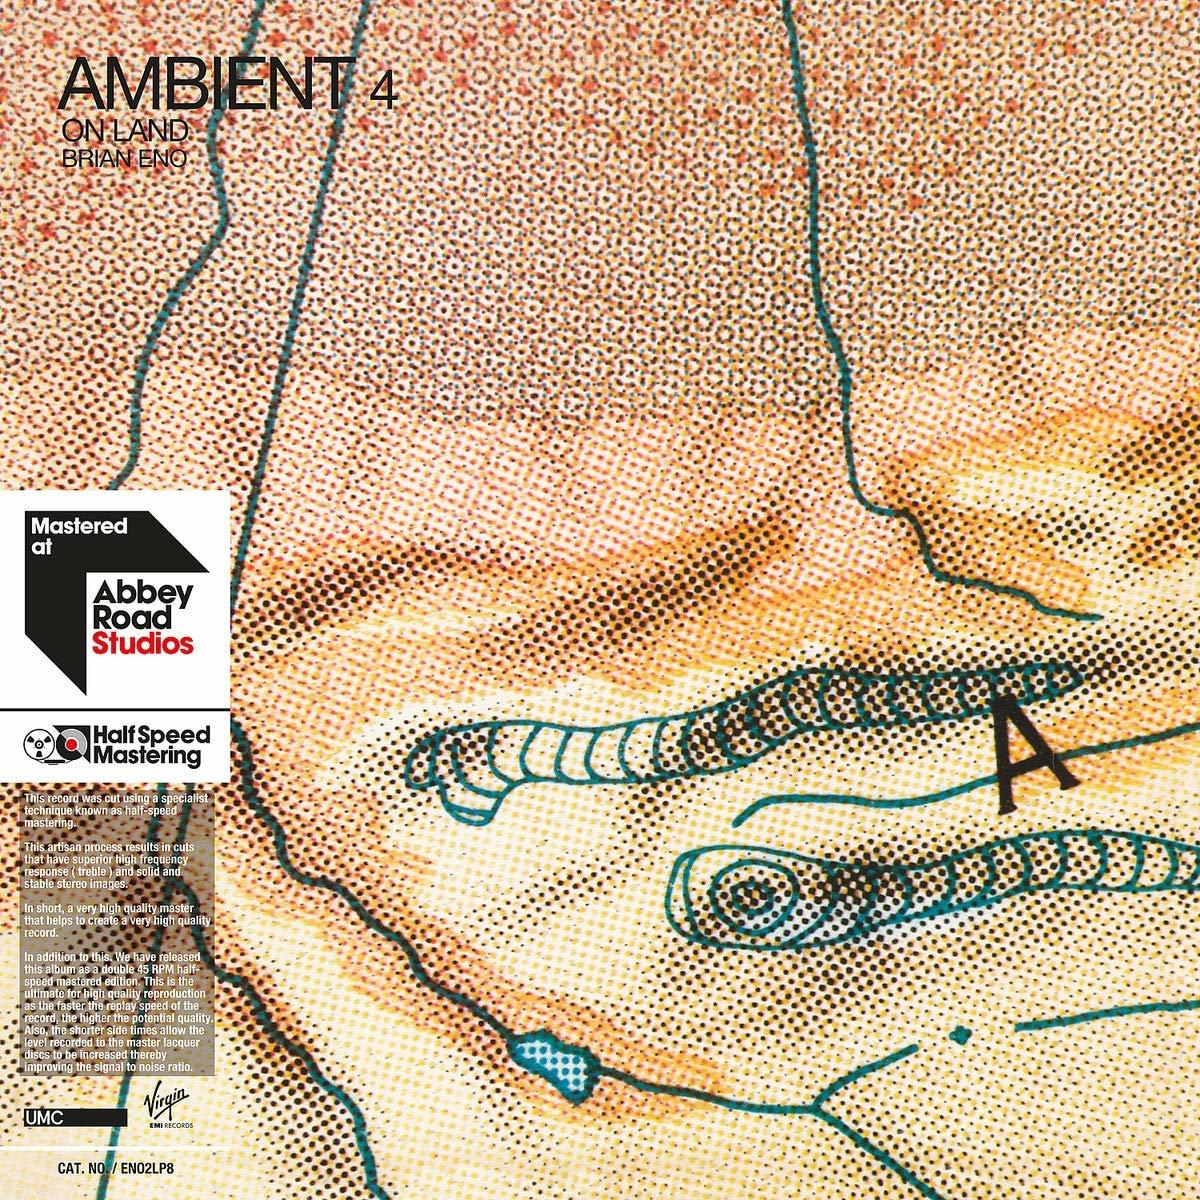 Brian Eno (Vinyl) On (Vinyl) - 4: Land Ambient 